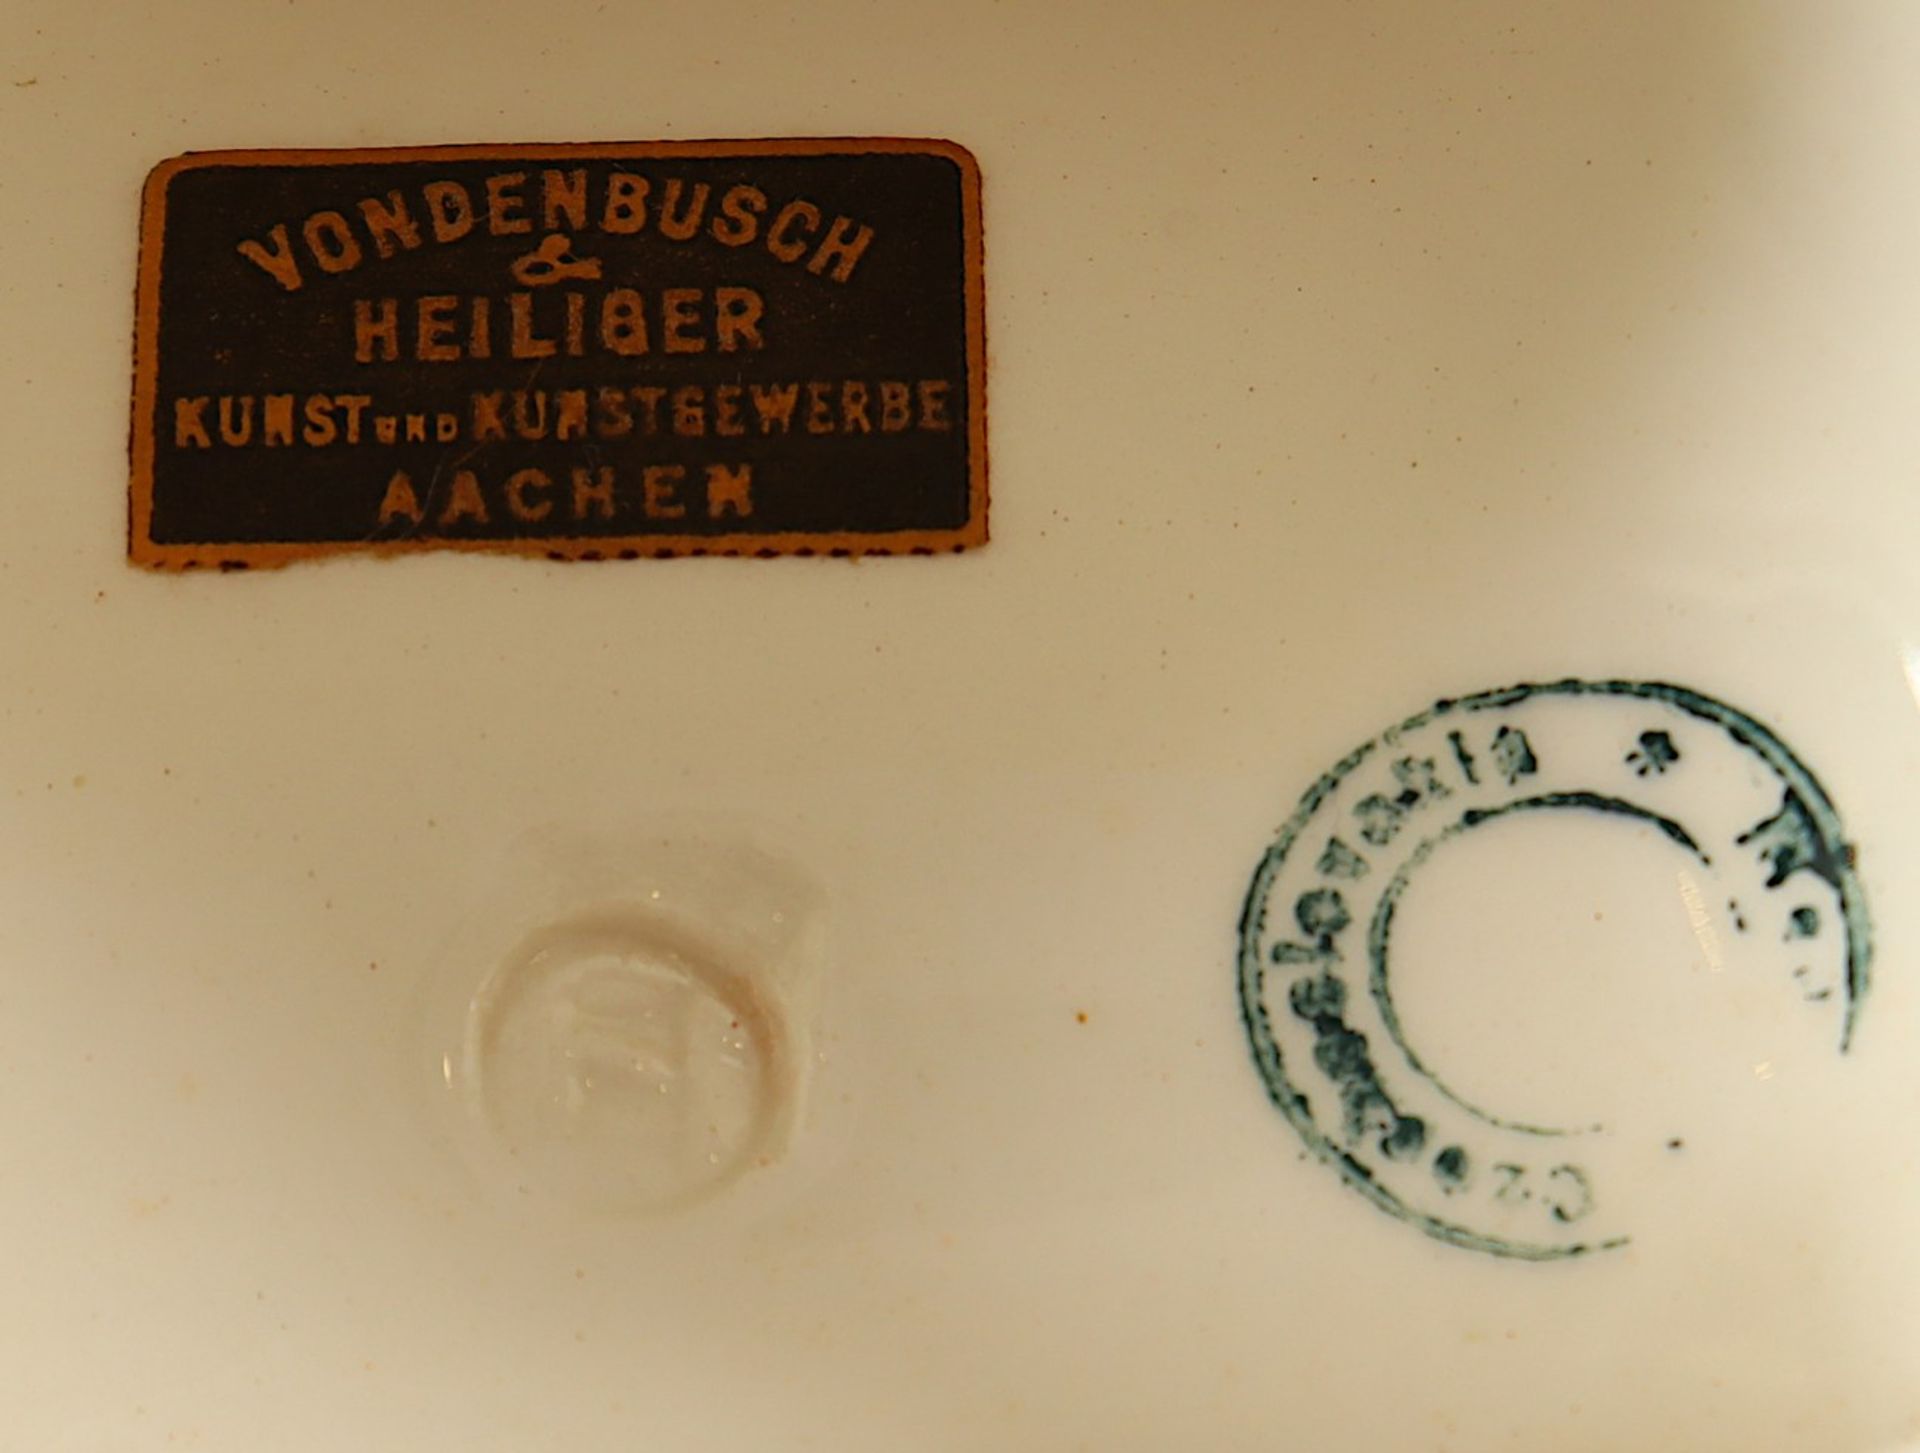 PAPAGEI, Keramik, farbig staffiert, L 43, TSCHECHIEN, um 1920/30 - Image 3 of 3